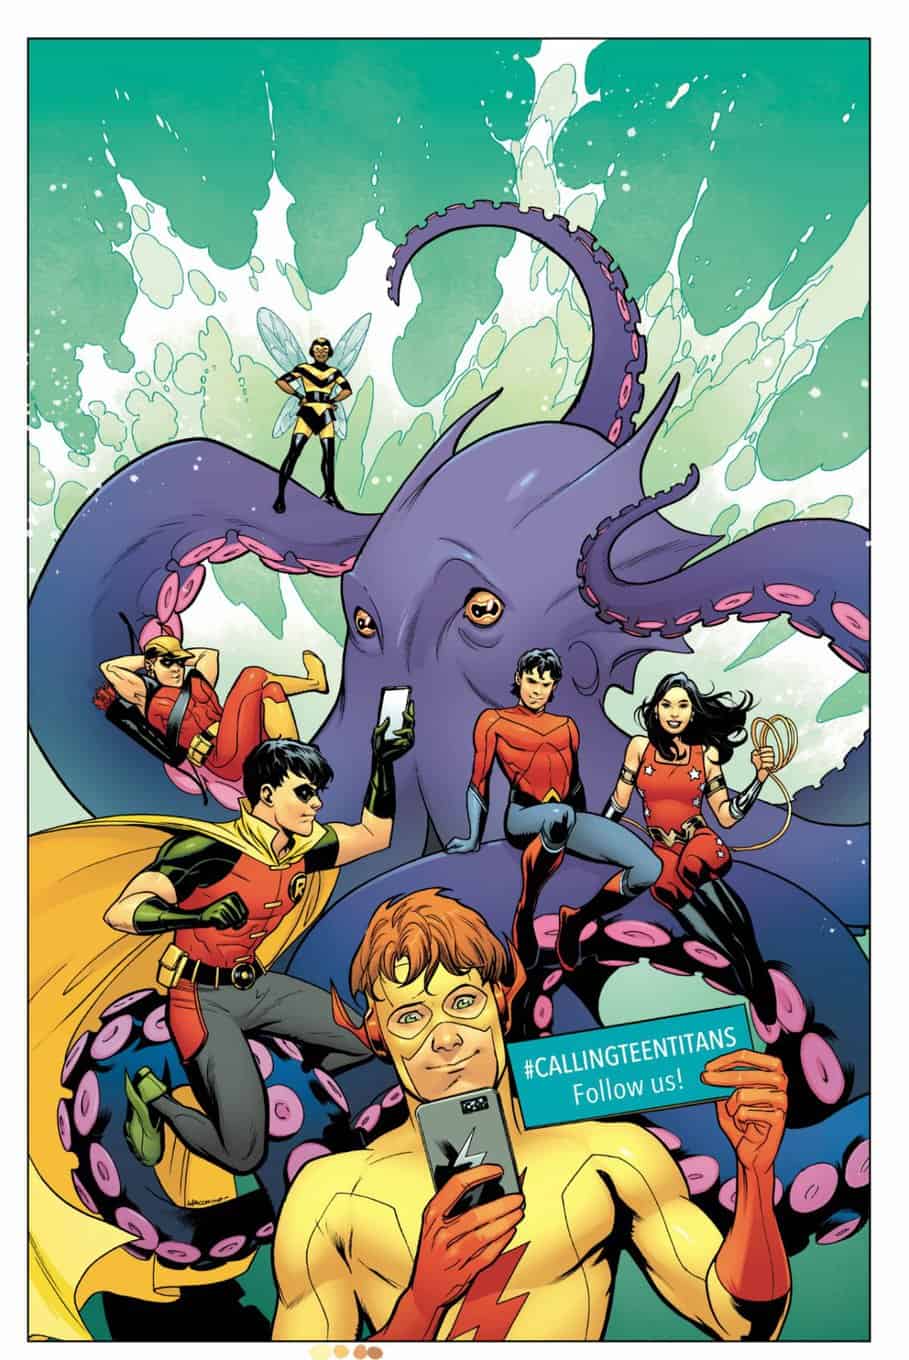 World's Finest Teen Titans #1 E